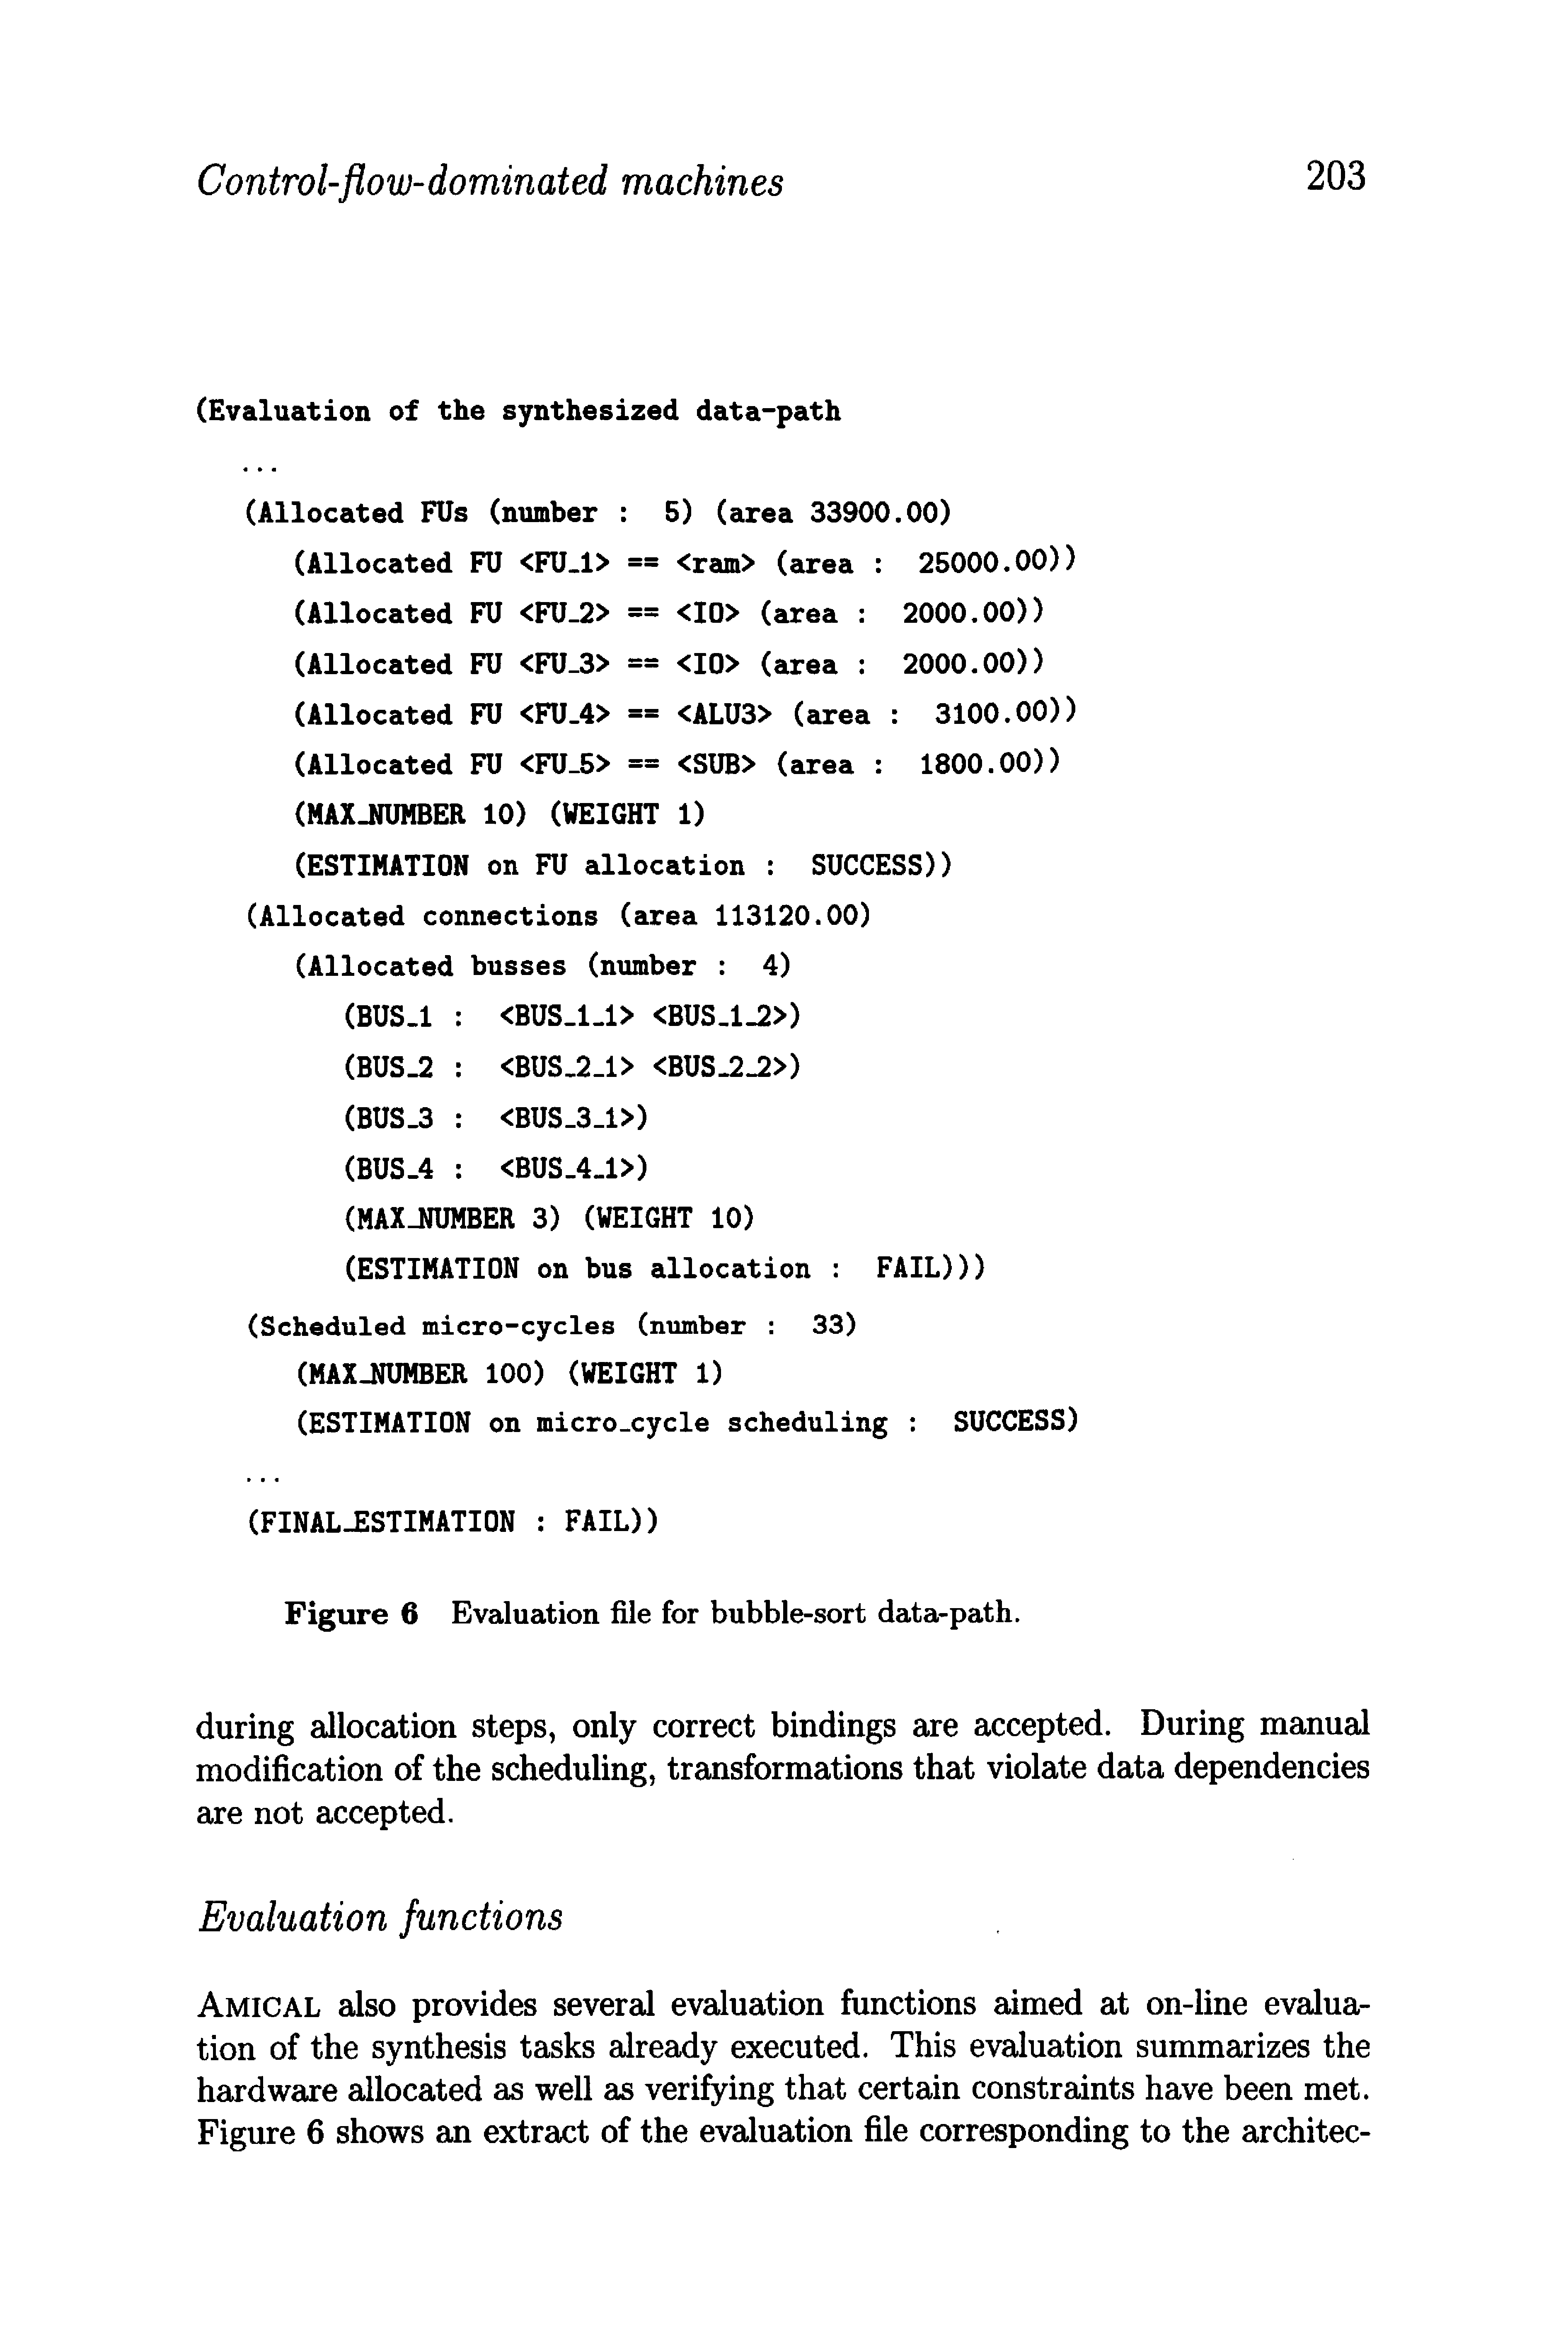 Figure 6 Evaluation file for bubble-sort data-path.